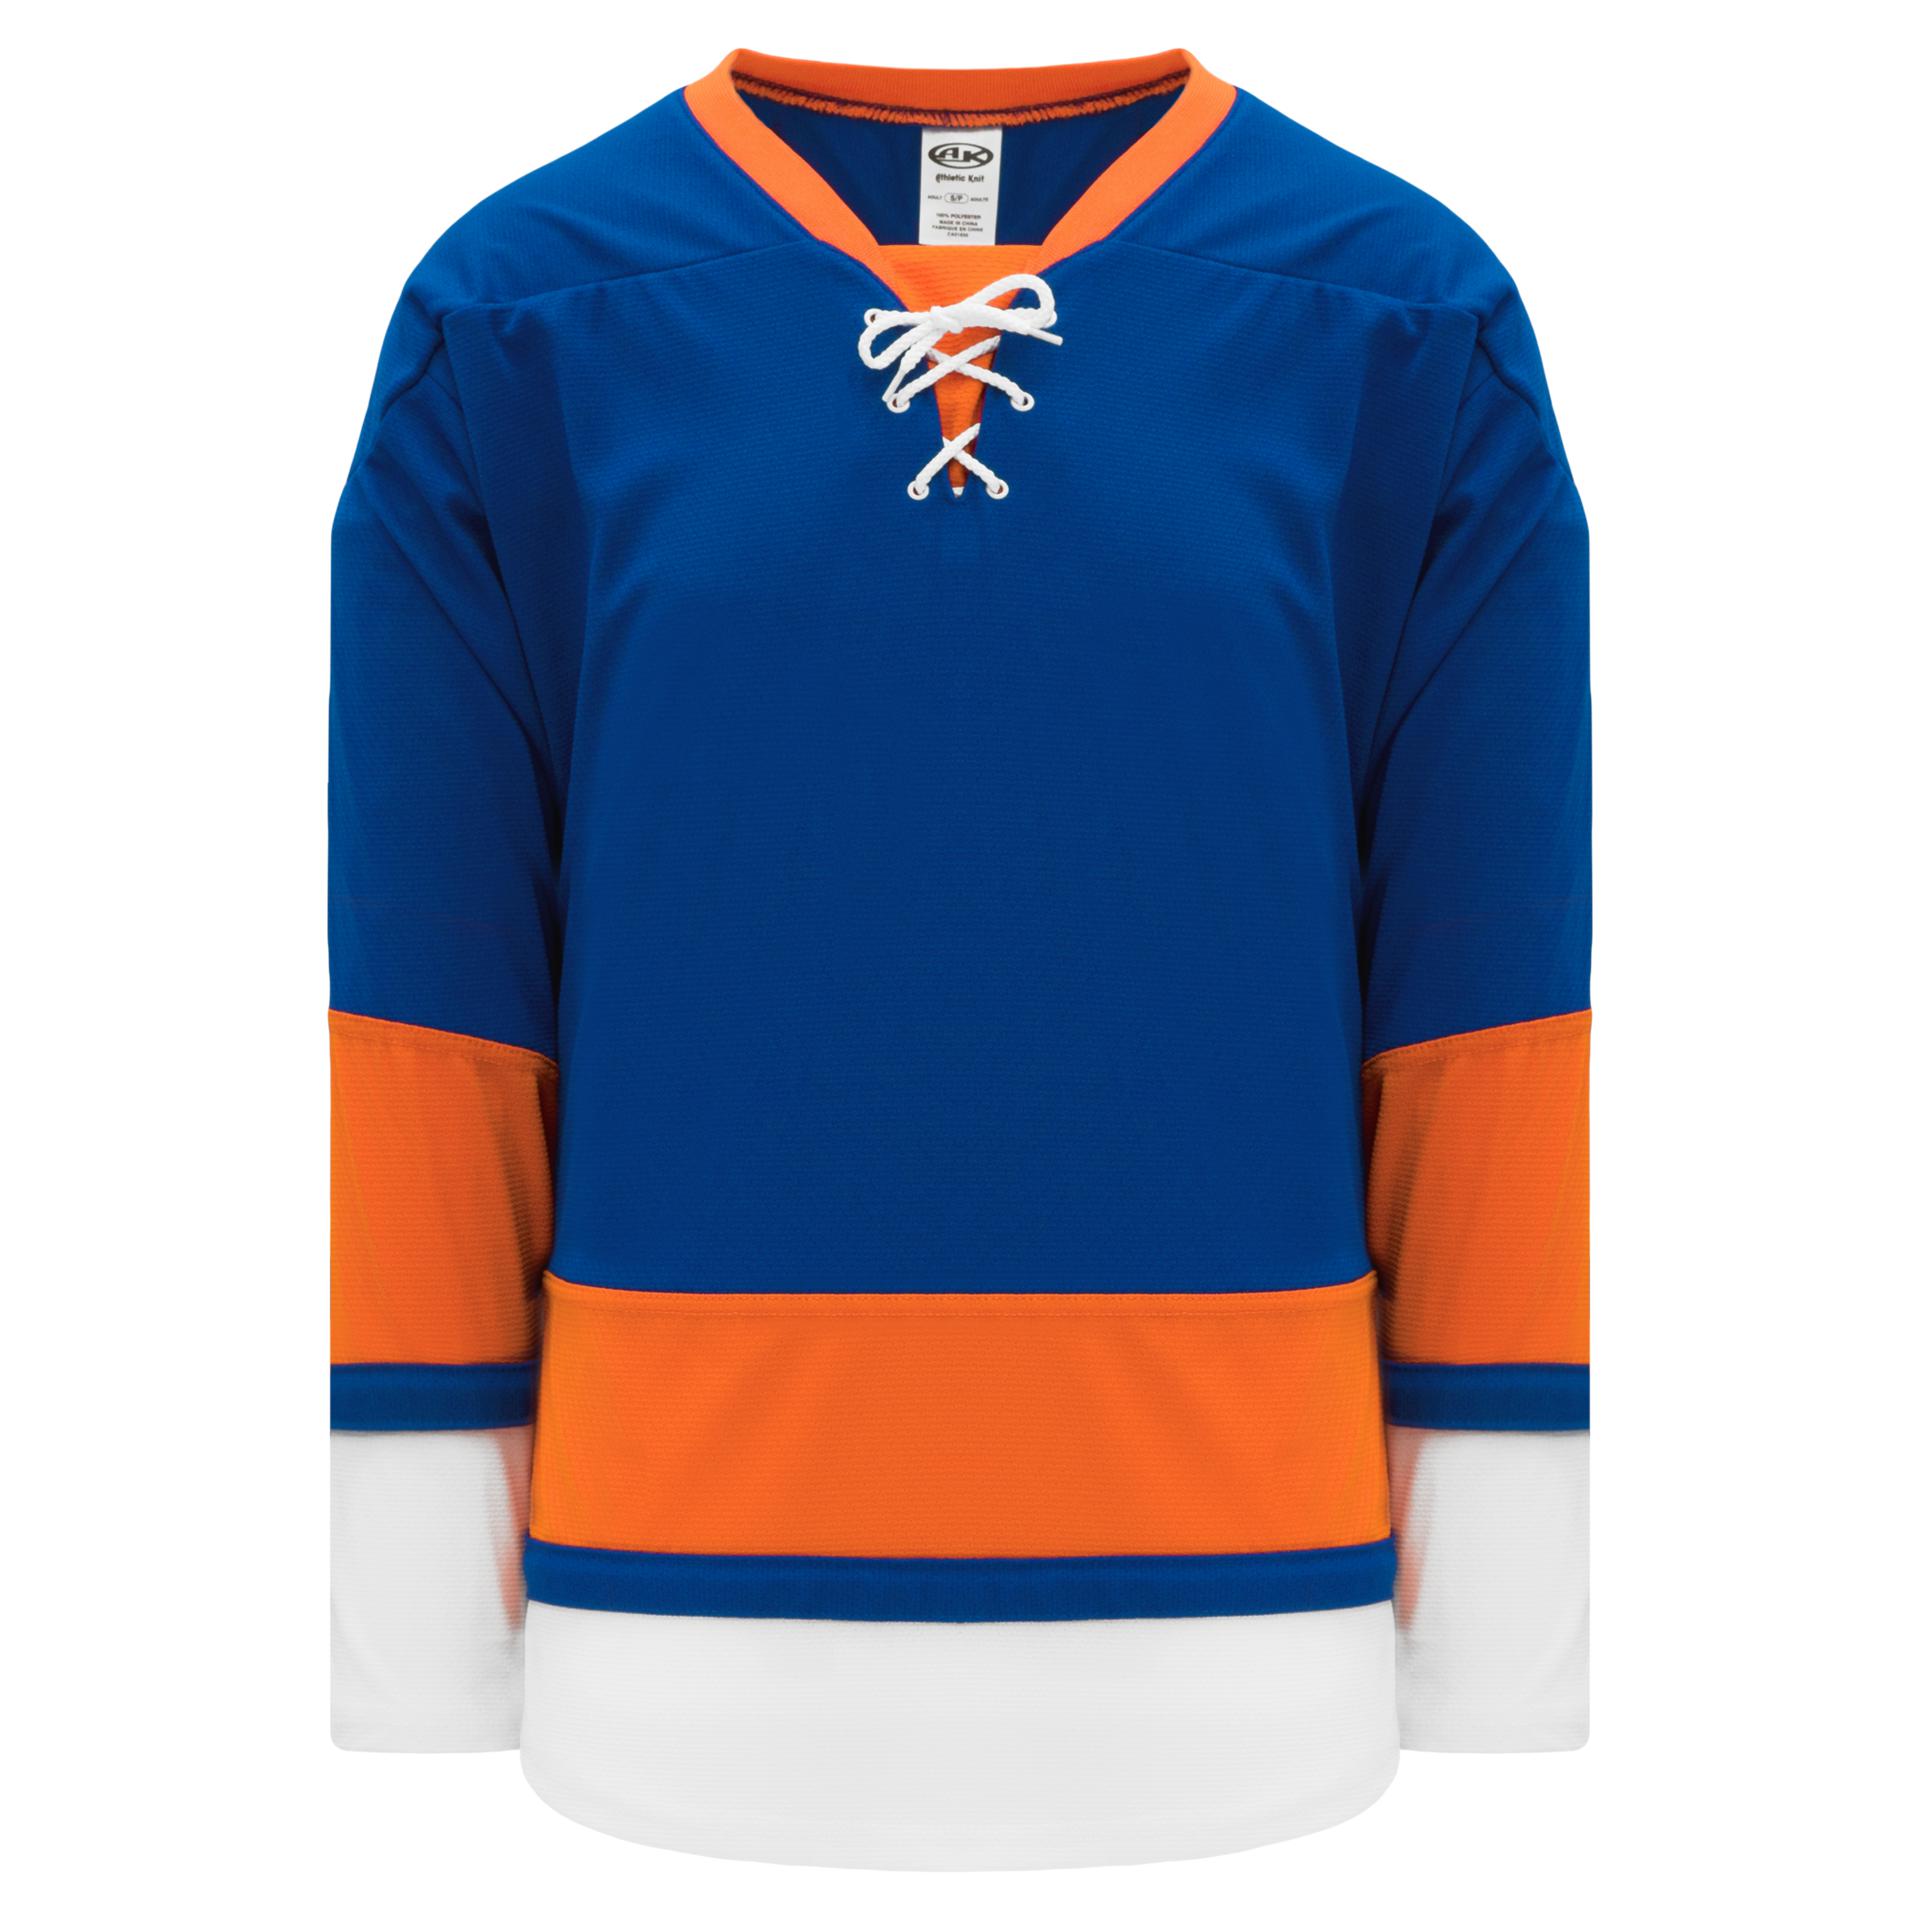 New York Islanders Winter Classic jersey concept! - #ny #nyi #islanders  #nhl #hockey